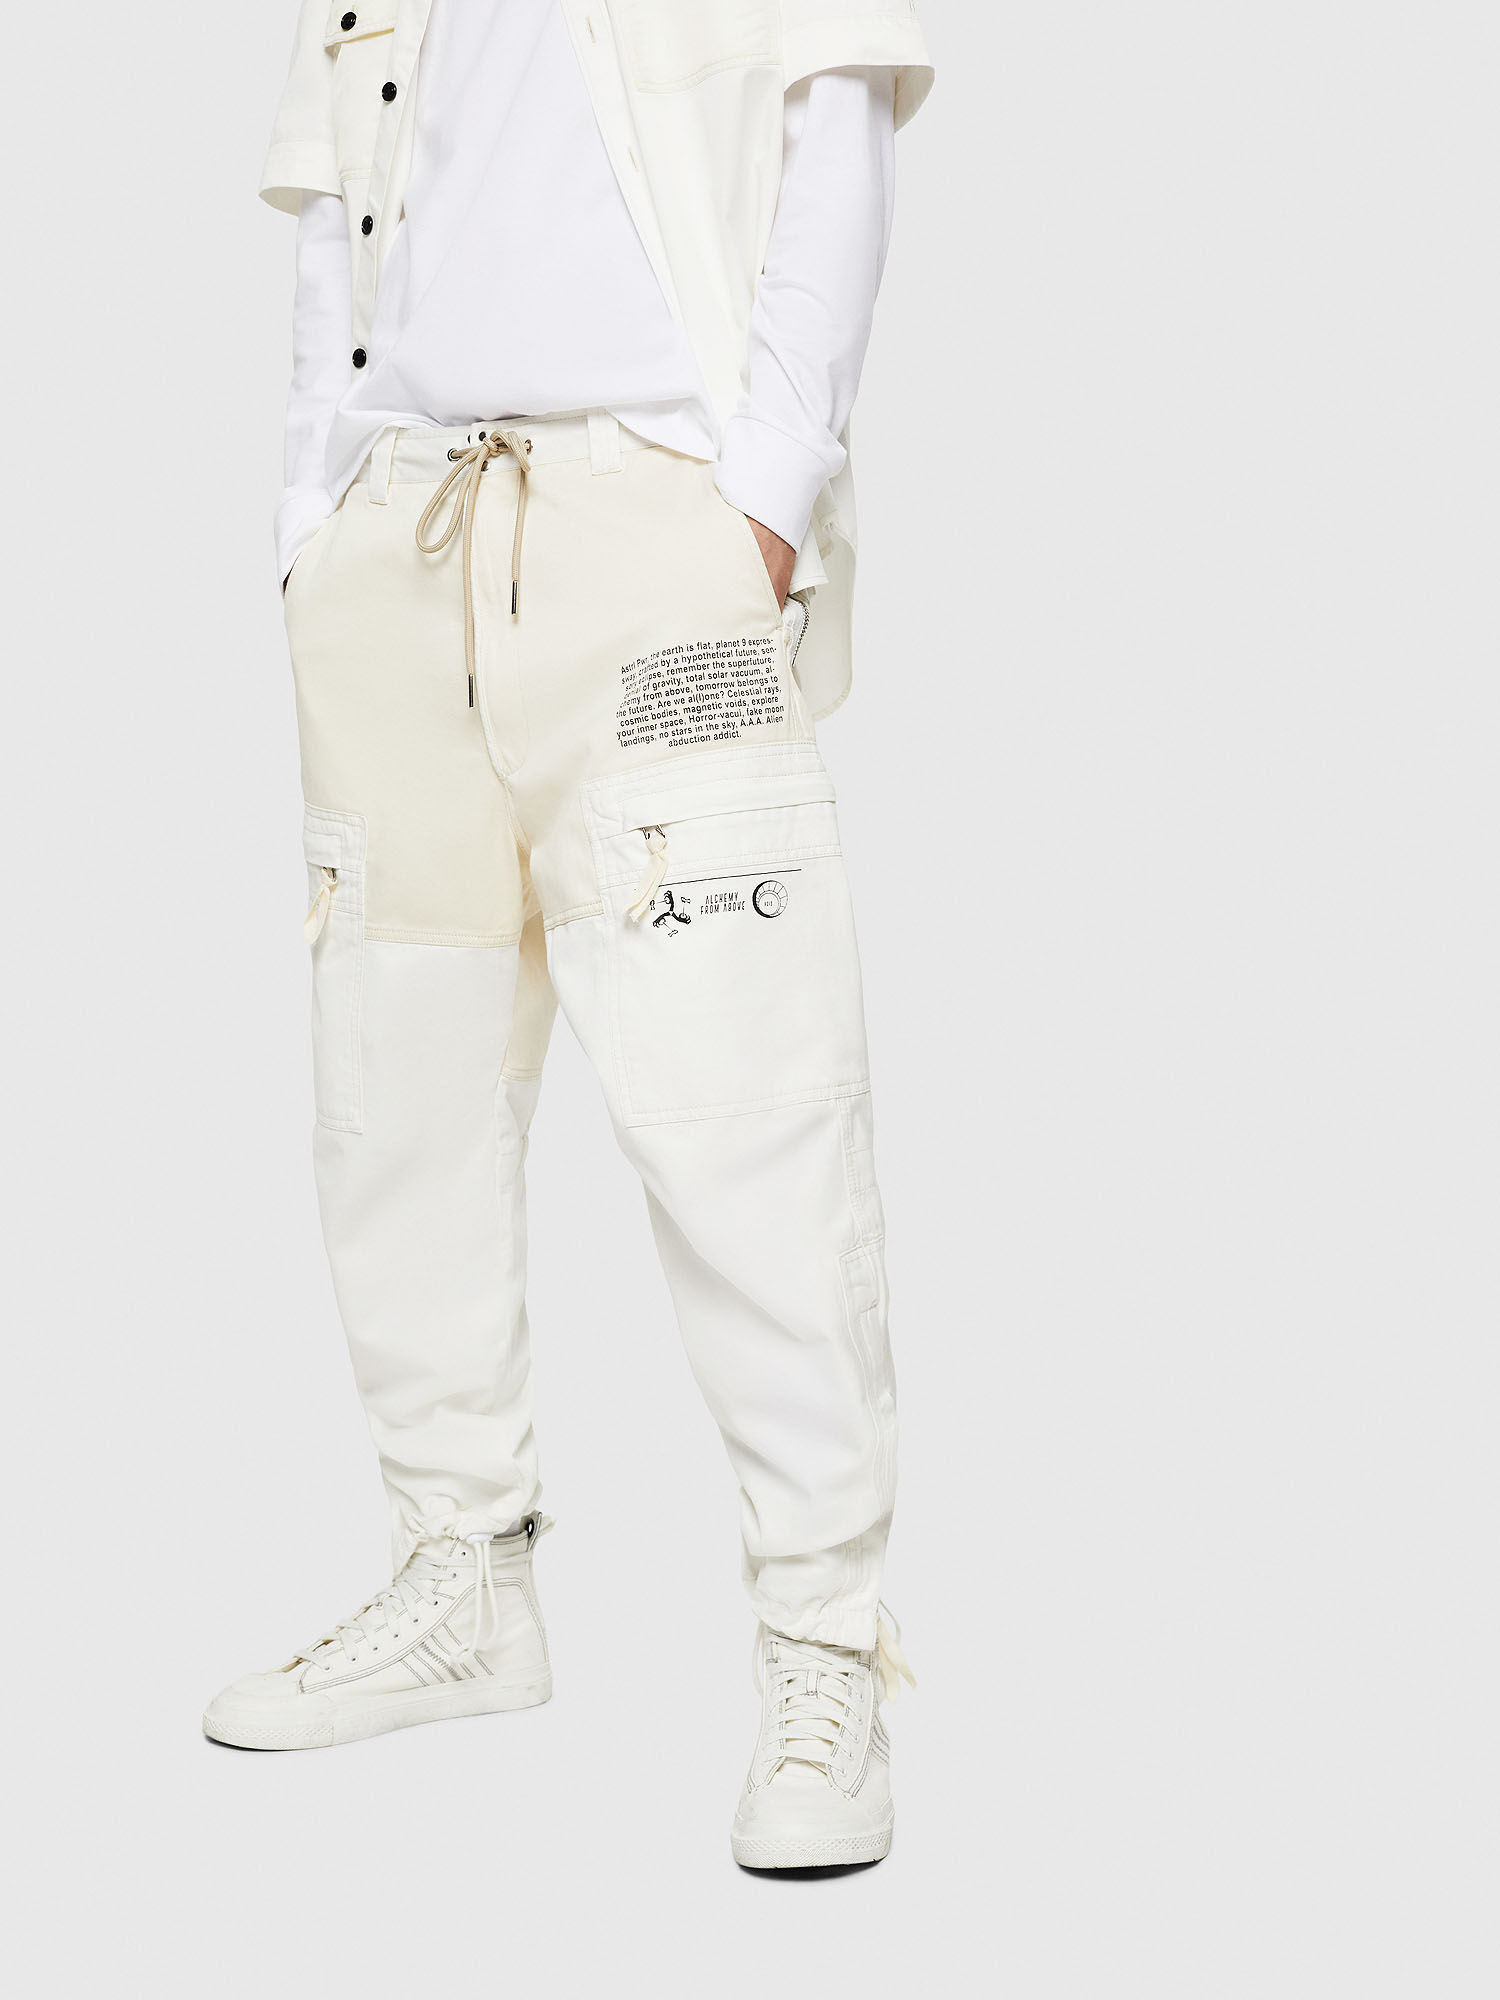 mens all white cargo pants